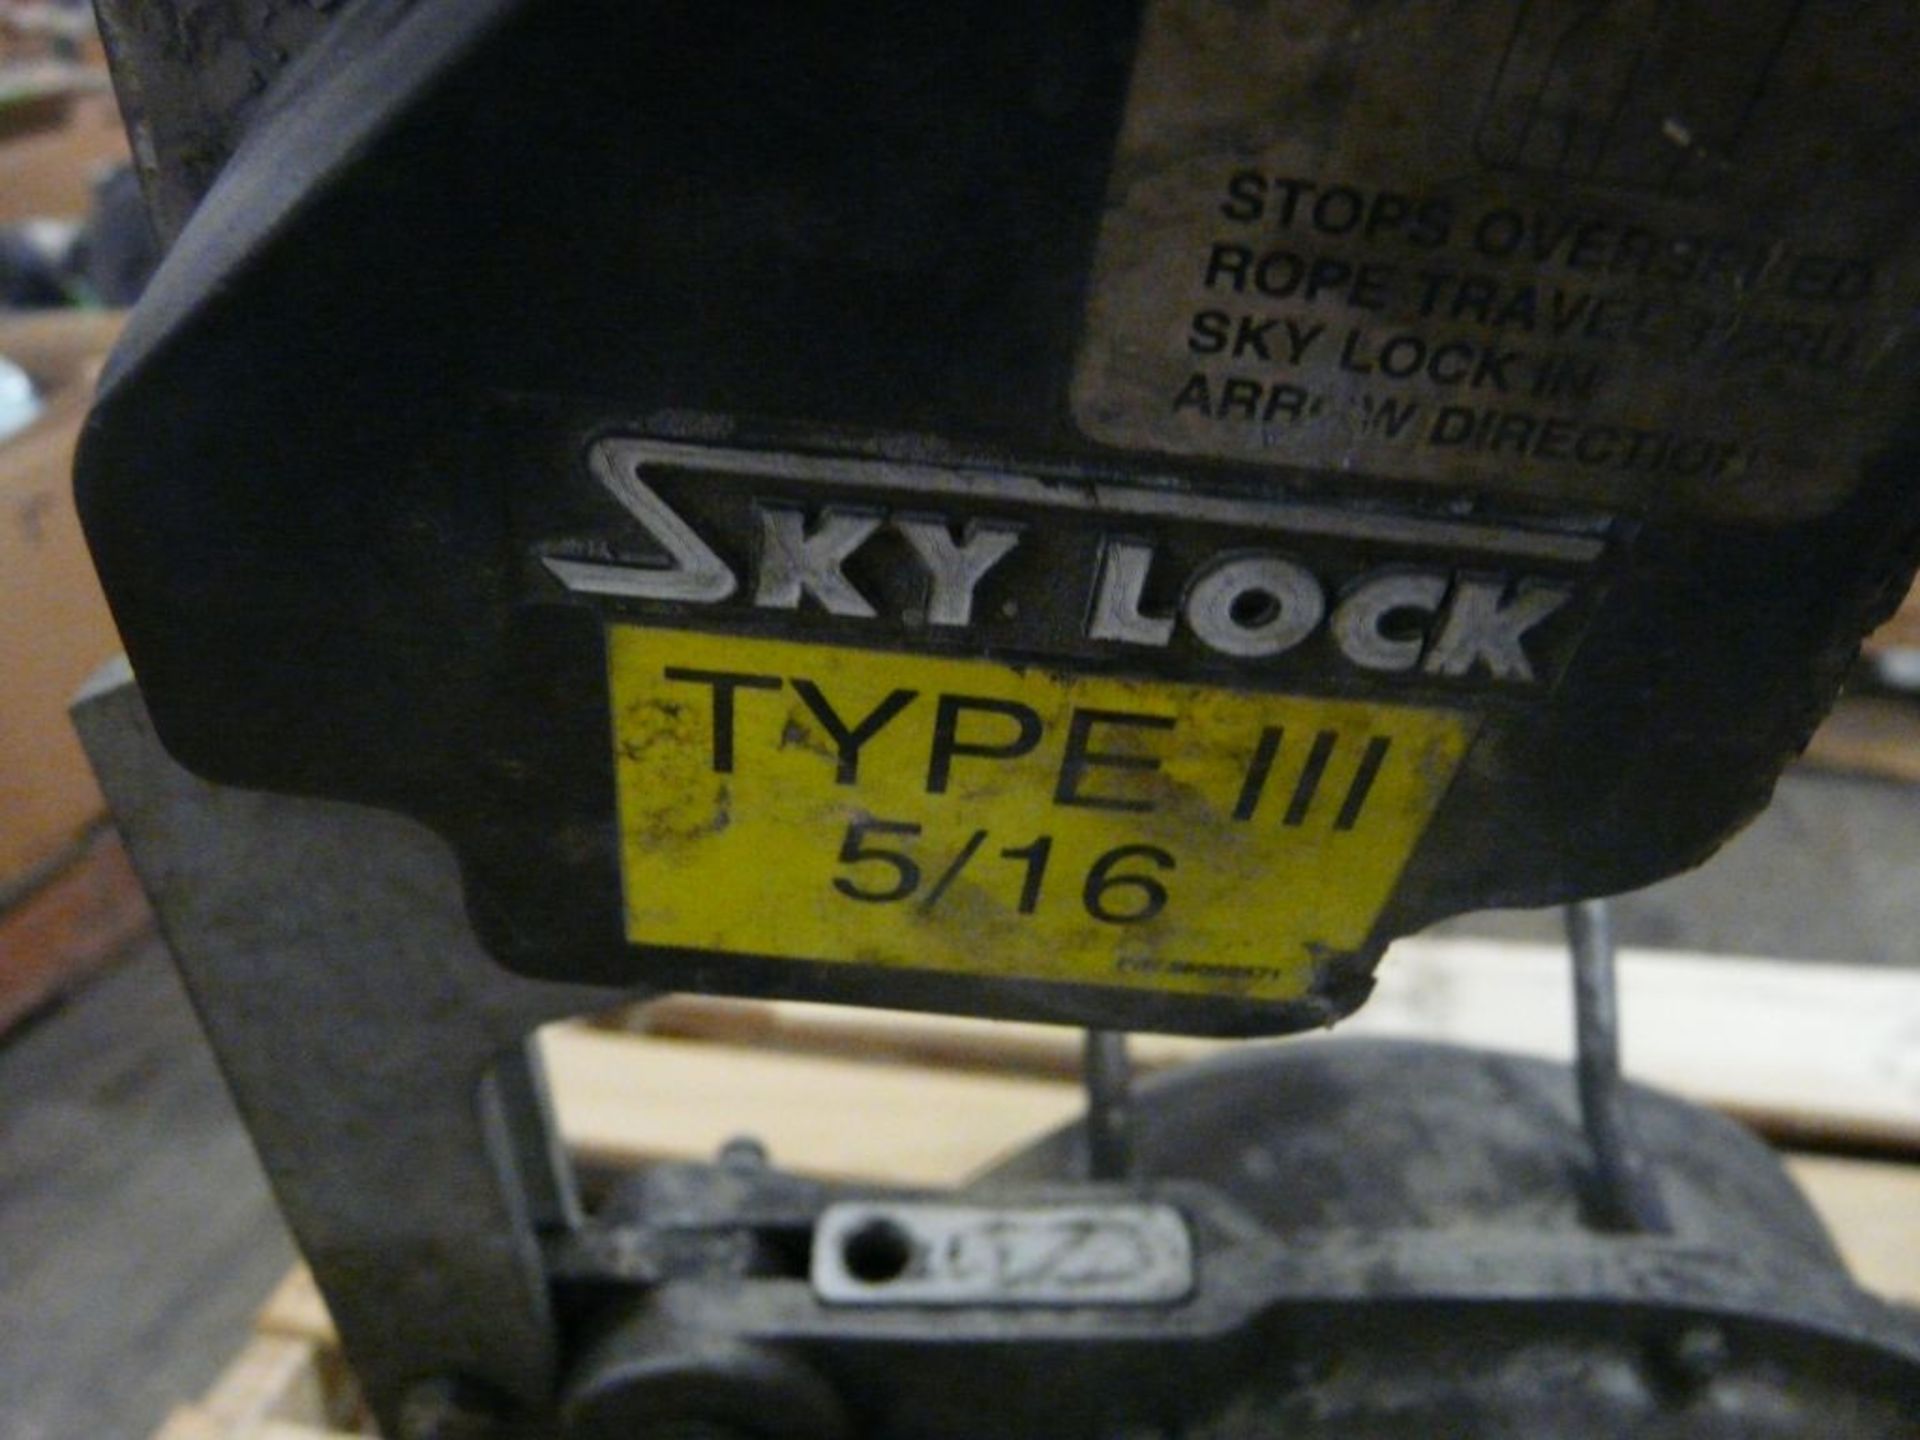 Skylock Type III 5/16|Part No. 56009839; 1100 lb Max Load; Tag: 225015 - Image 3 of 4